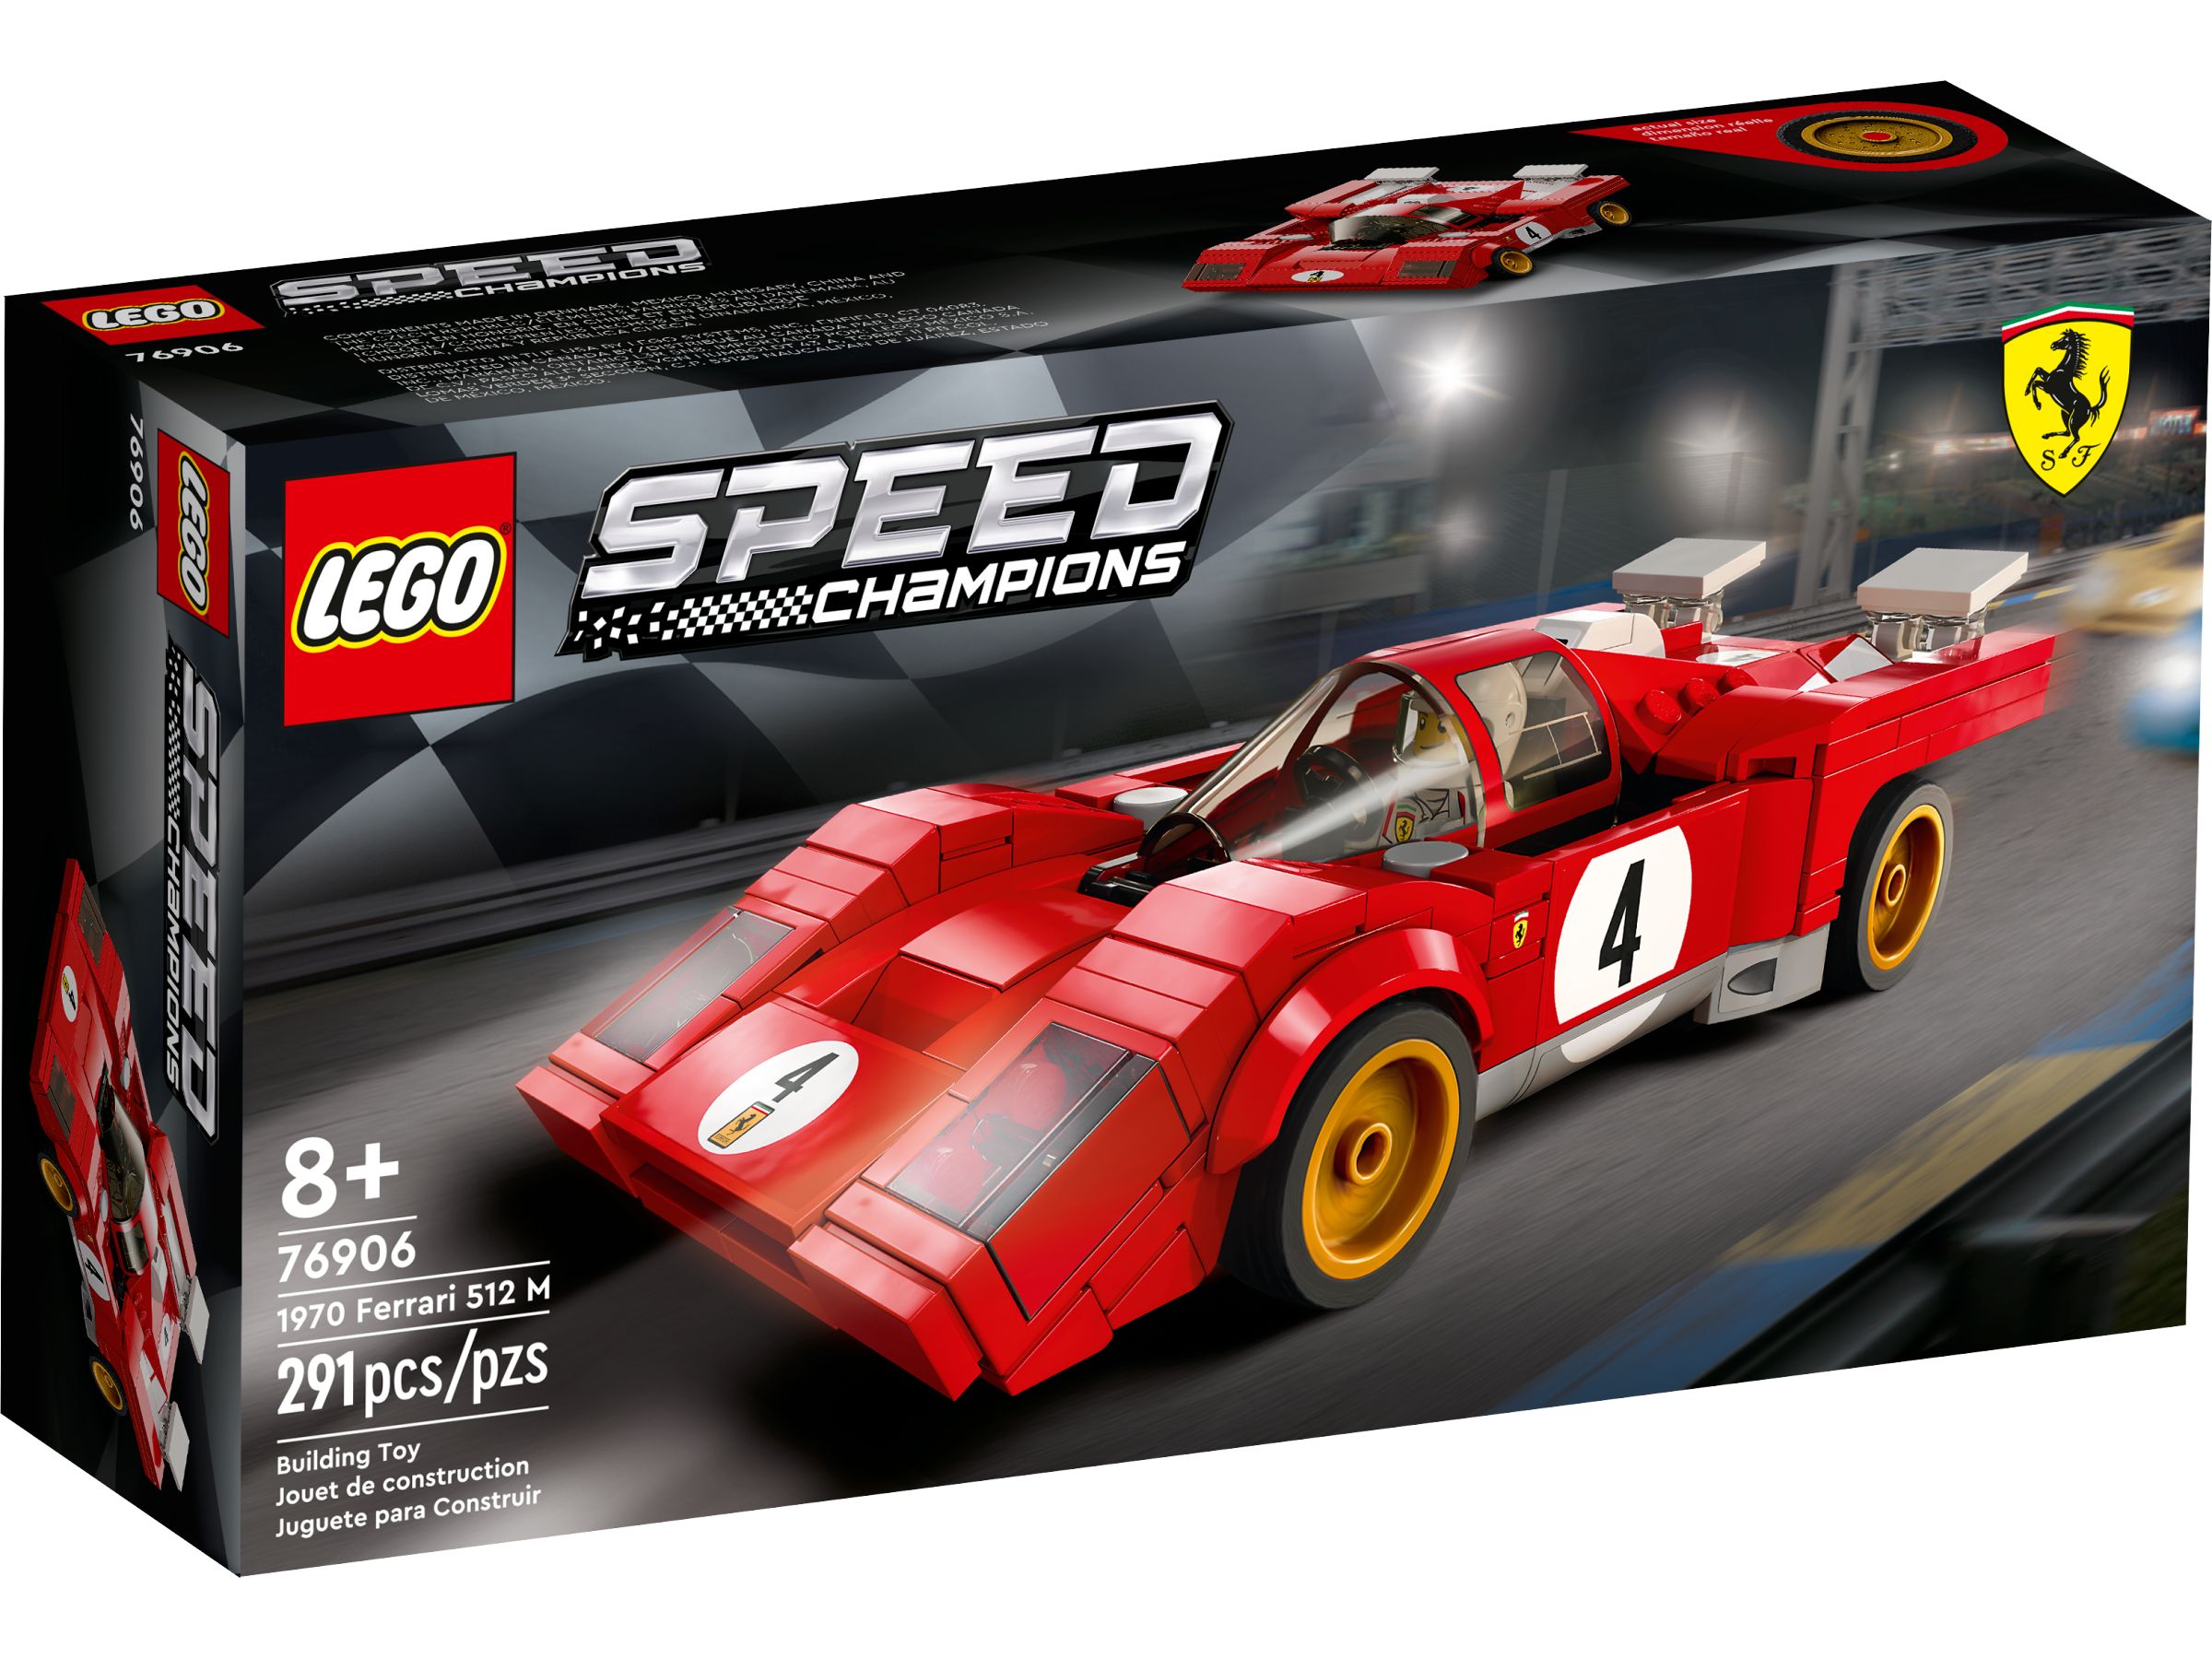 LEGO Speed Champions 76906 1970 Ferrari 512 M LEGO_76906_alt1.jpg